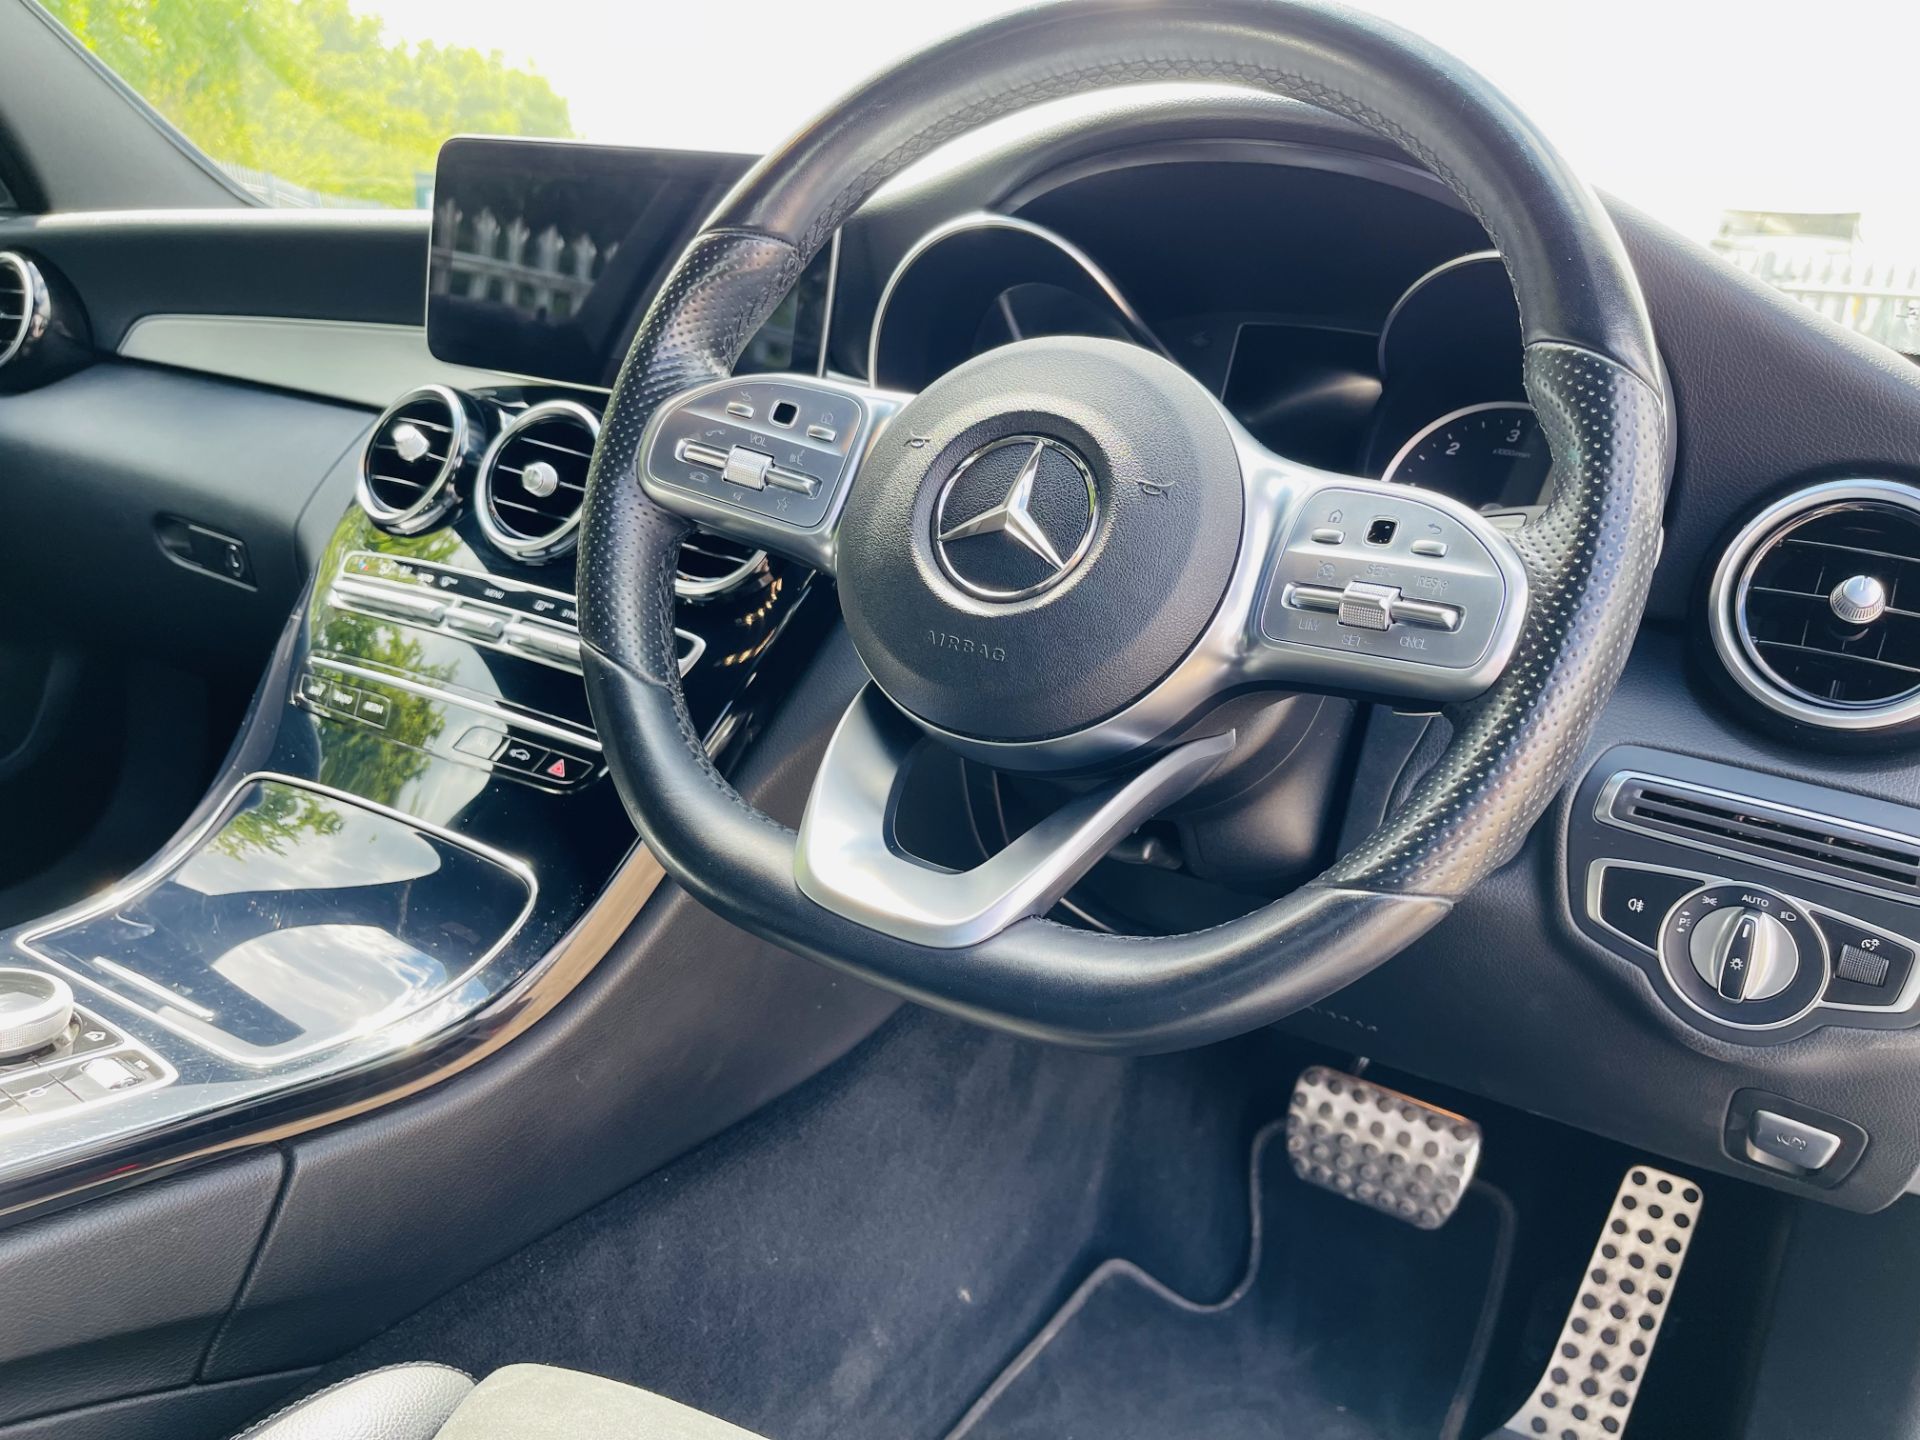 ** ON SALE ** Mercedes Benz C220 AMG Line 9G-Tronic Auto 2019 ‘69 Reg’ - Sat Nav - A/C - Euro 6 - Image 23 of 39